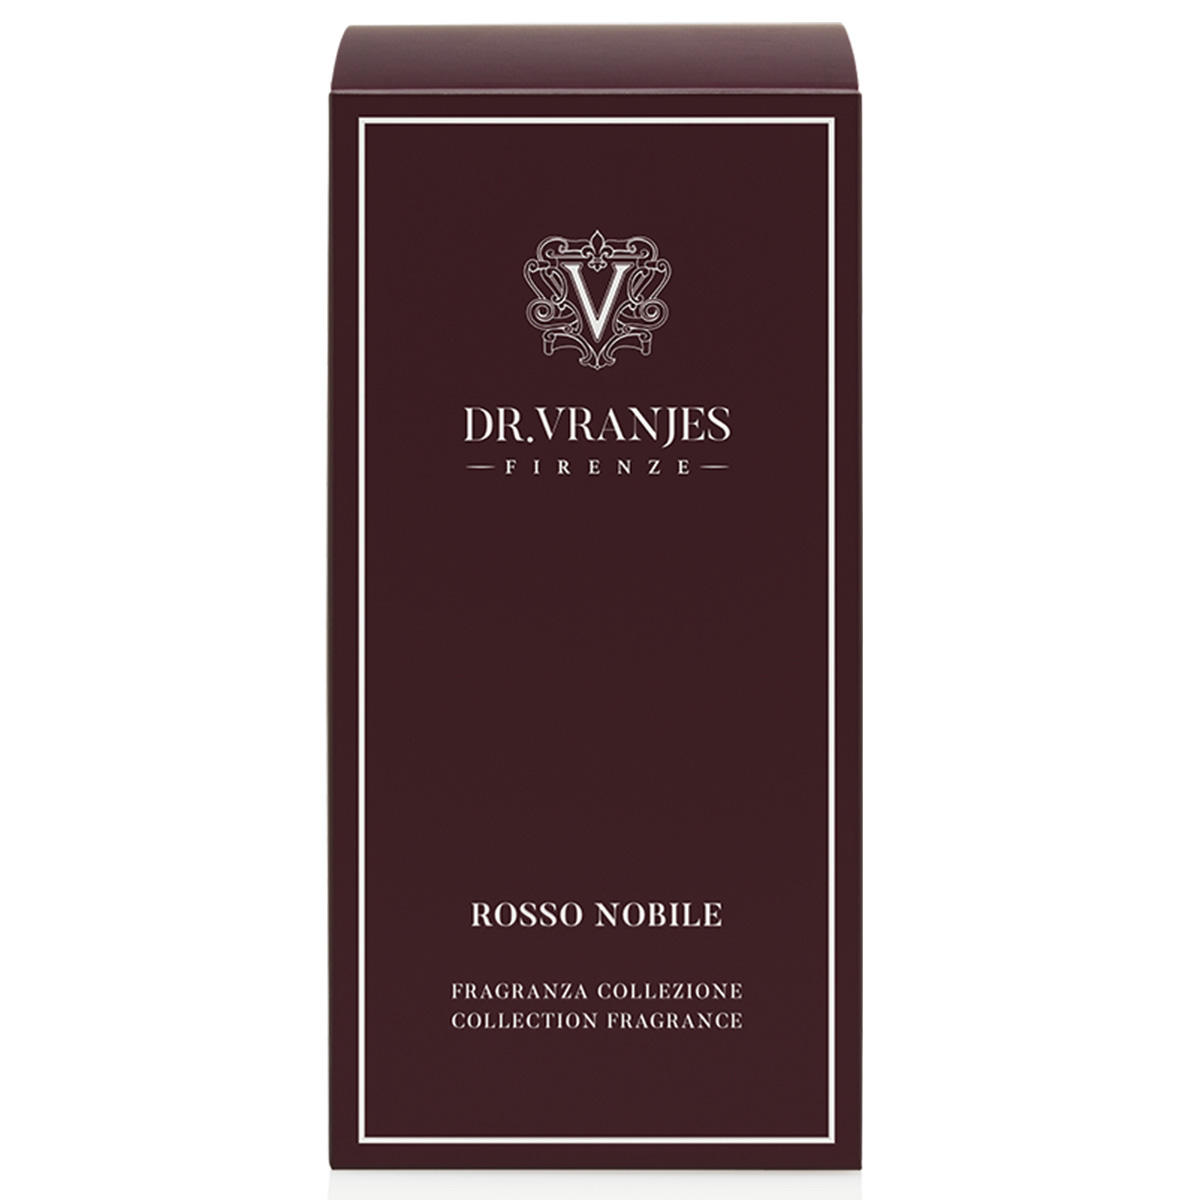 DR. VRANJES FIRENZE Rosso Nobile Collection Fragrance 500 ml - 3